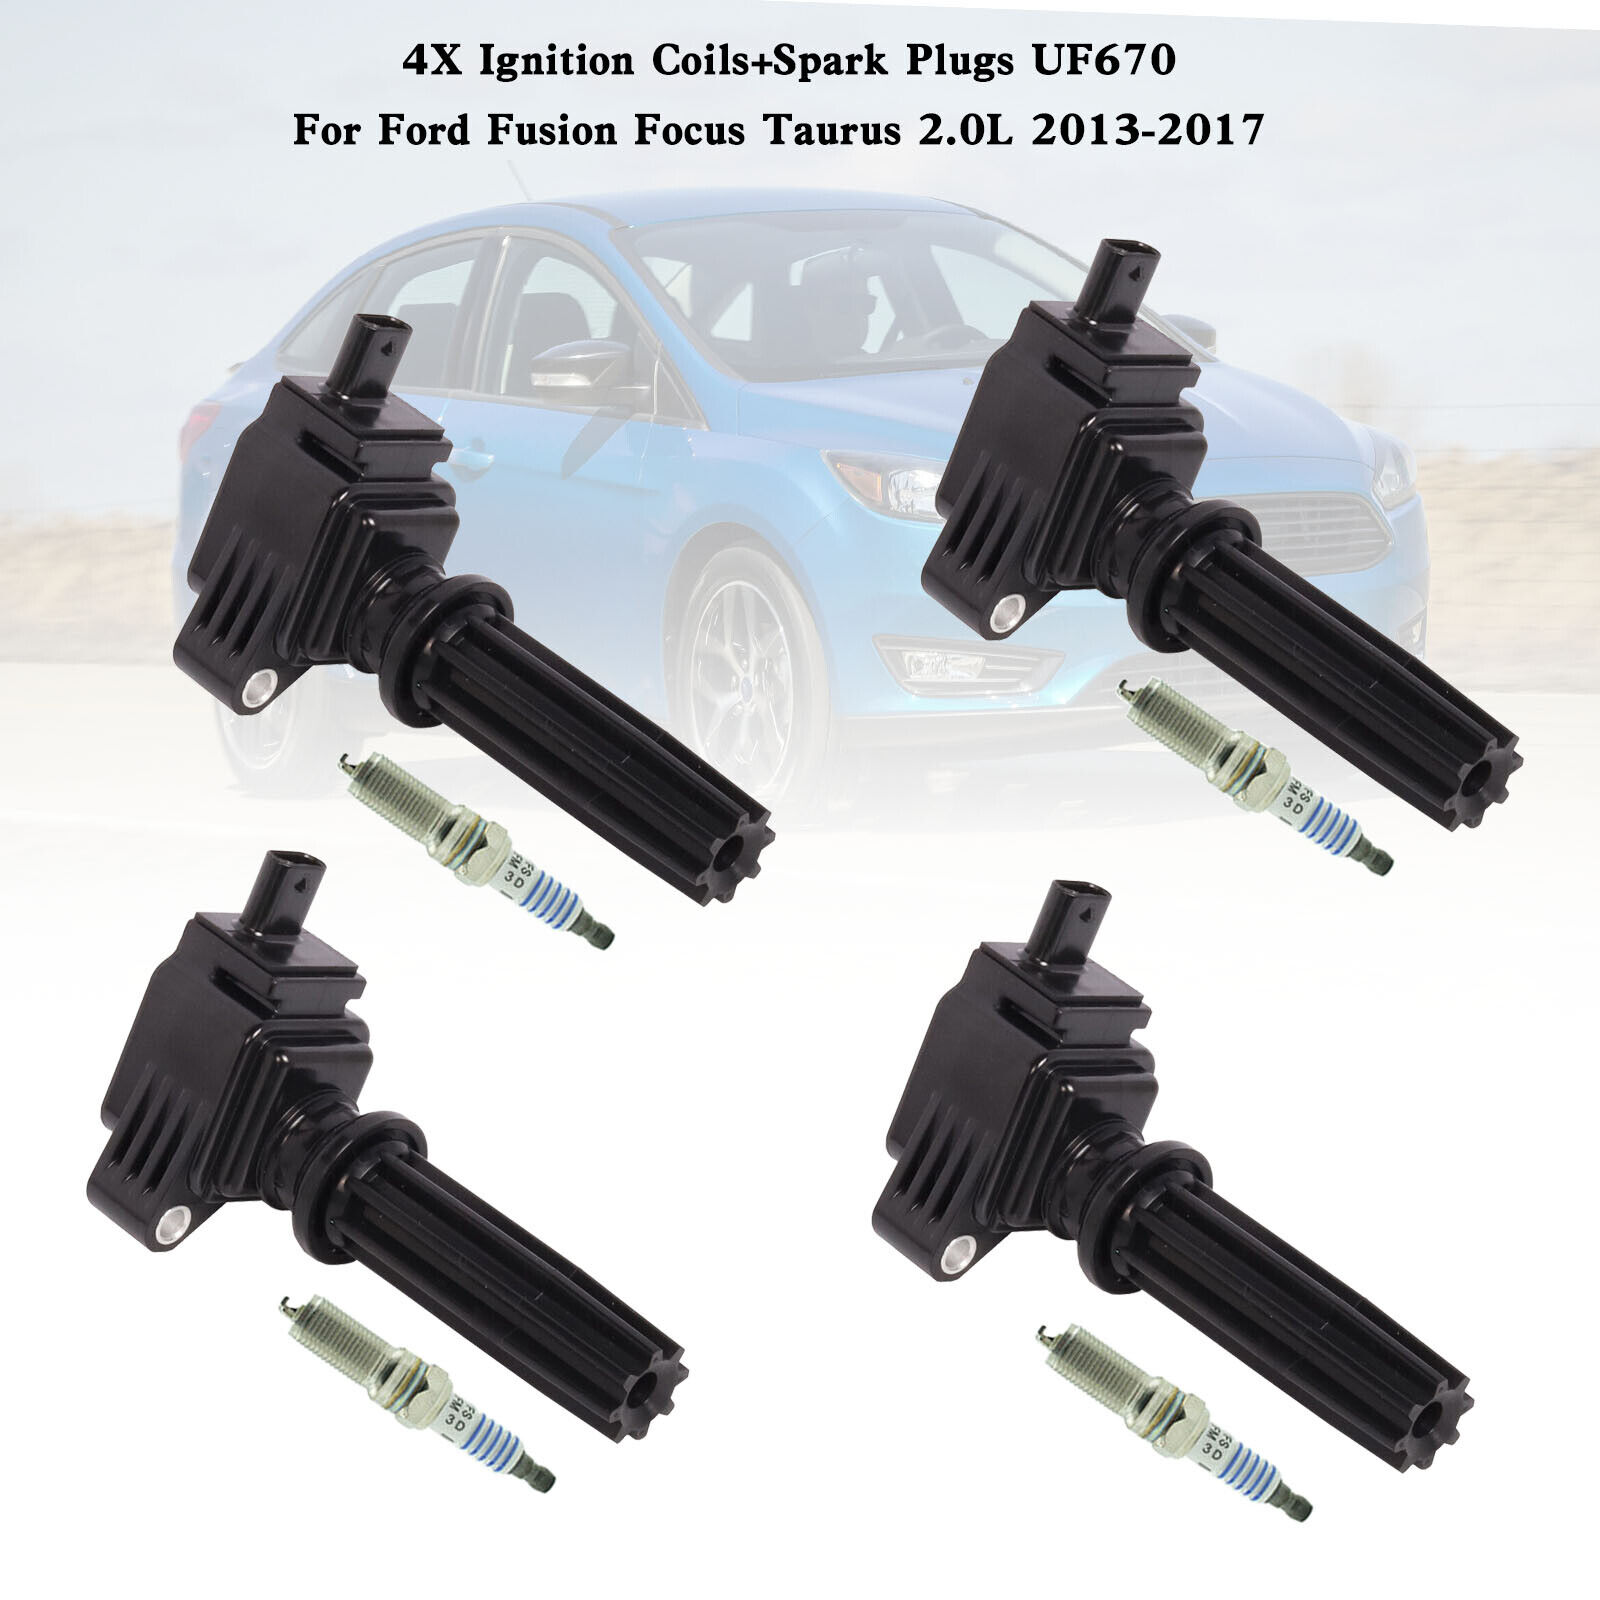 Image of 4X Ignition Coils+Spark Plugs UF670 Für Ford Fusion Focus Taurus 2.0L 2013-2017